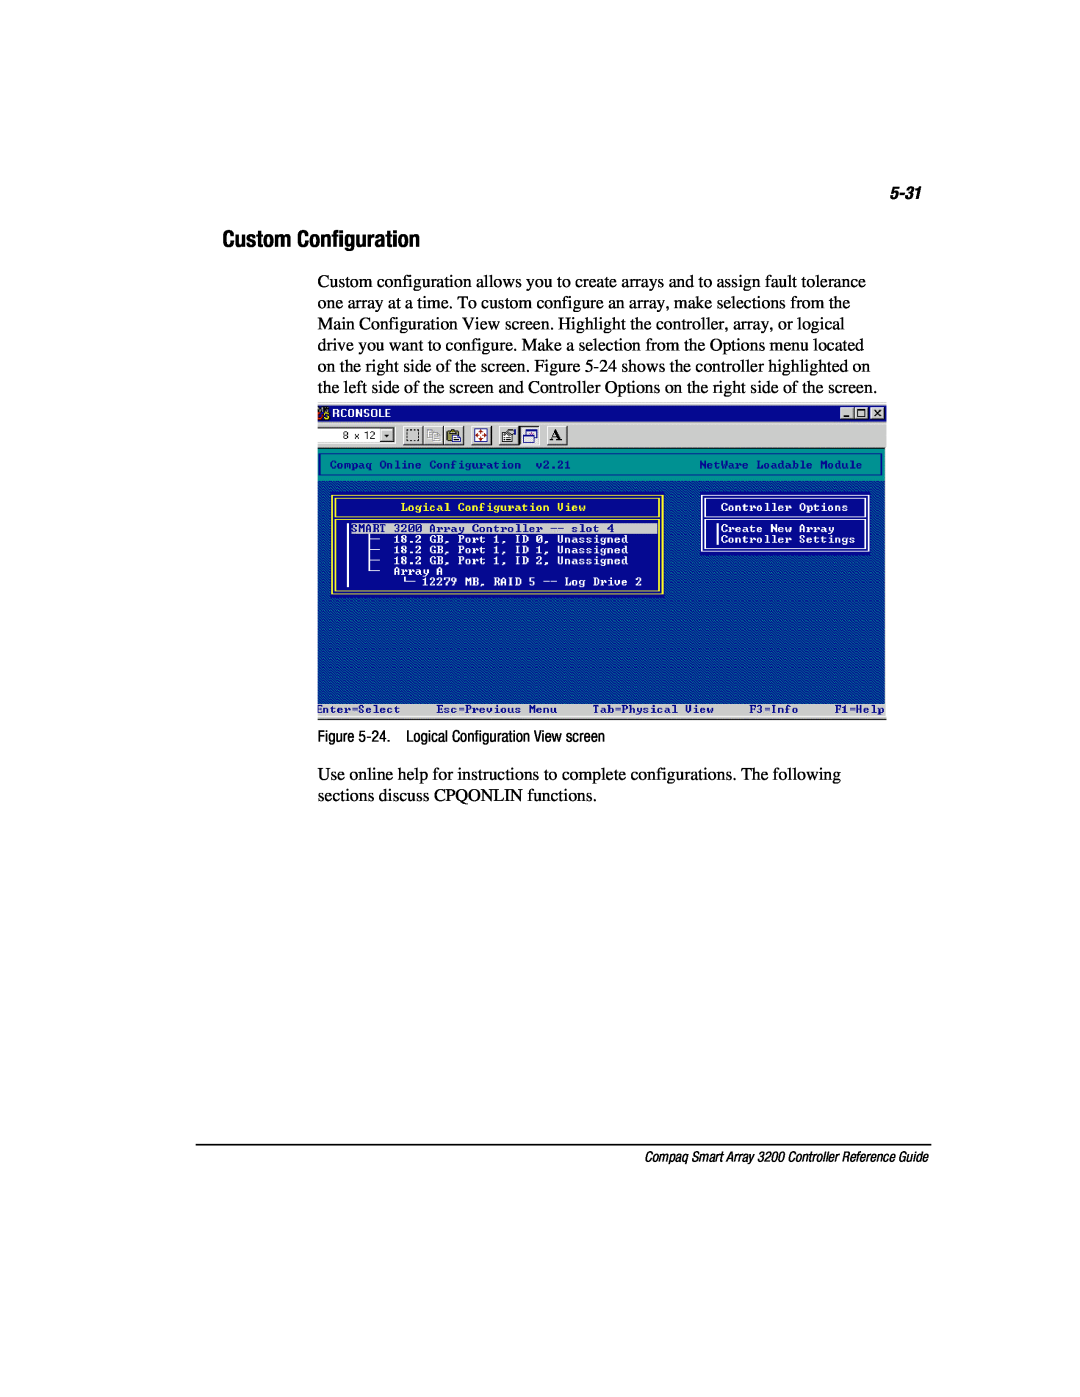 Compaq 3200 manual Custom Configuration, 5-31, 24. Logical Configuration View screen 